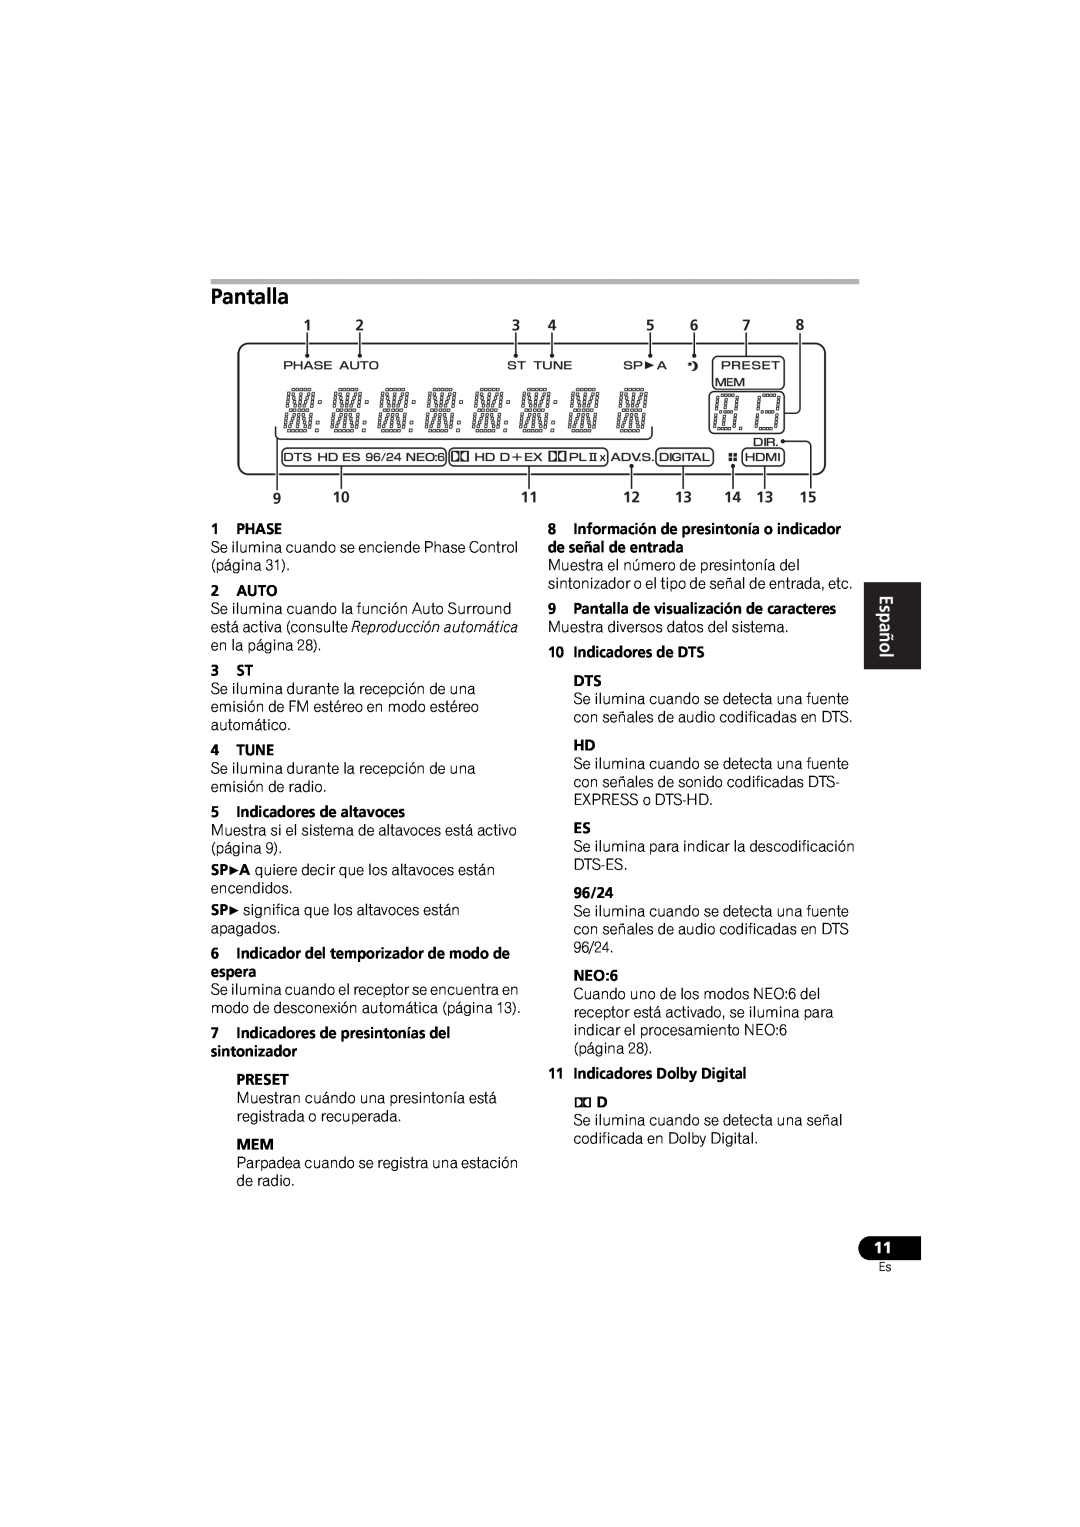 Pioneer VSX-520 manual Pantalla, English, Français, Español, 12 13 14 13 